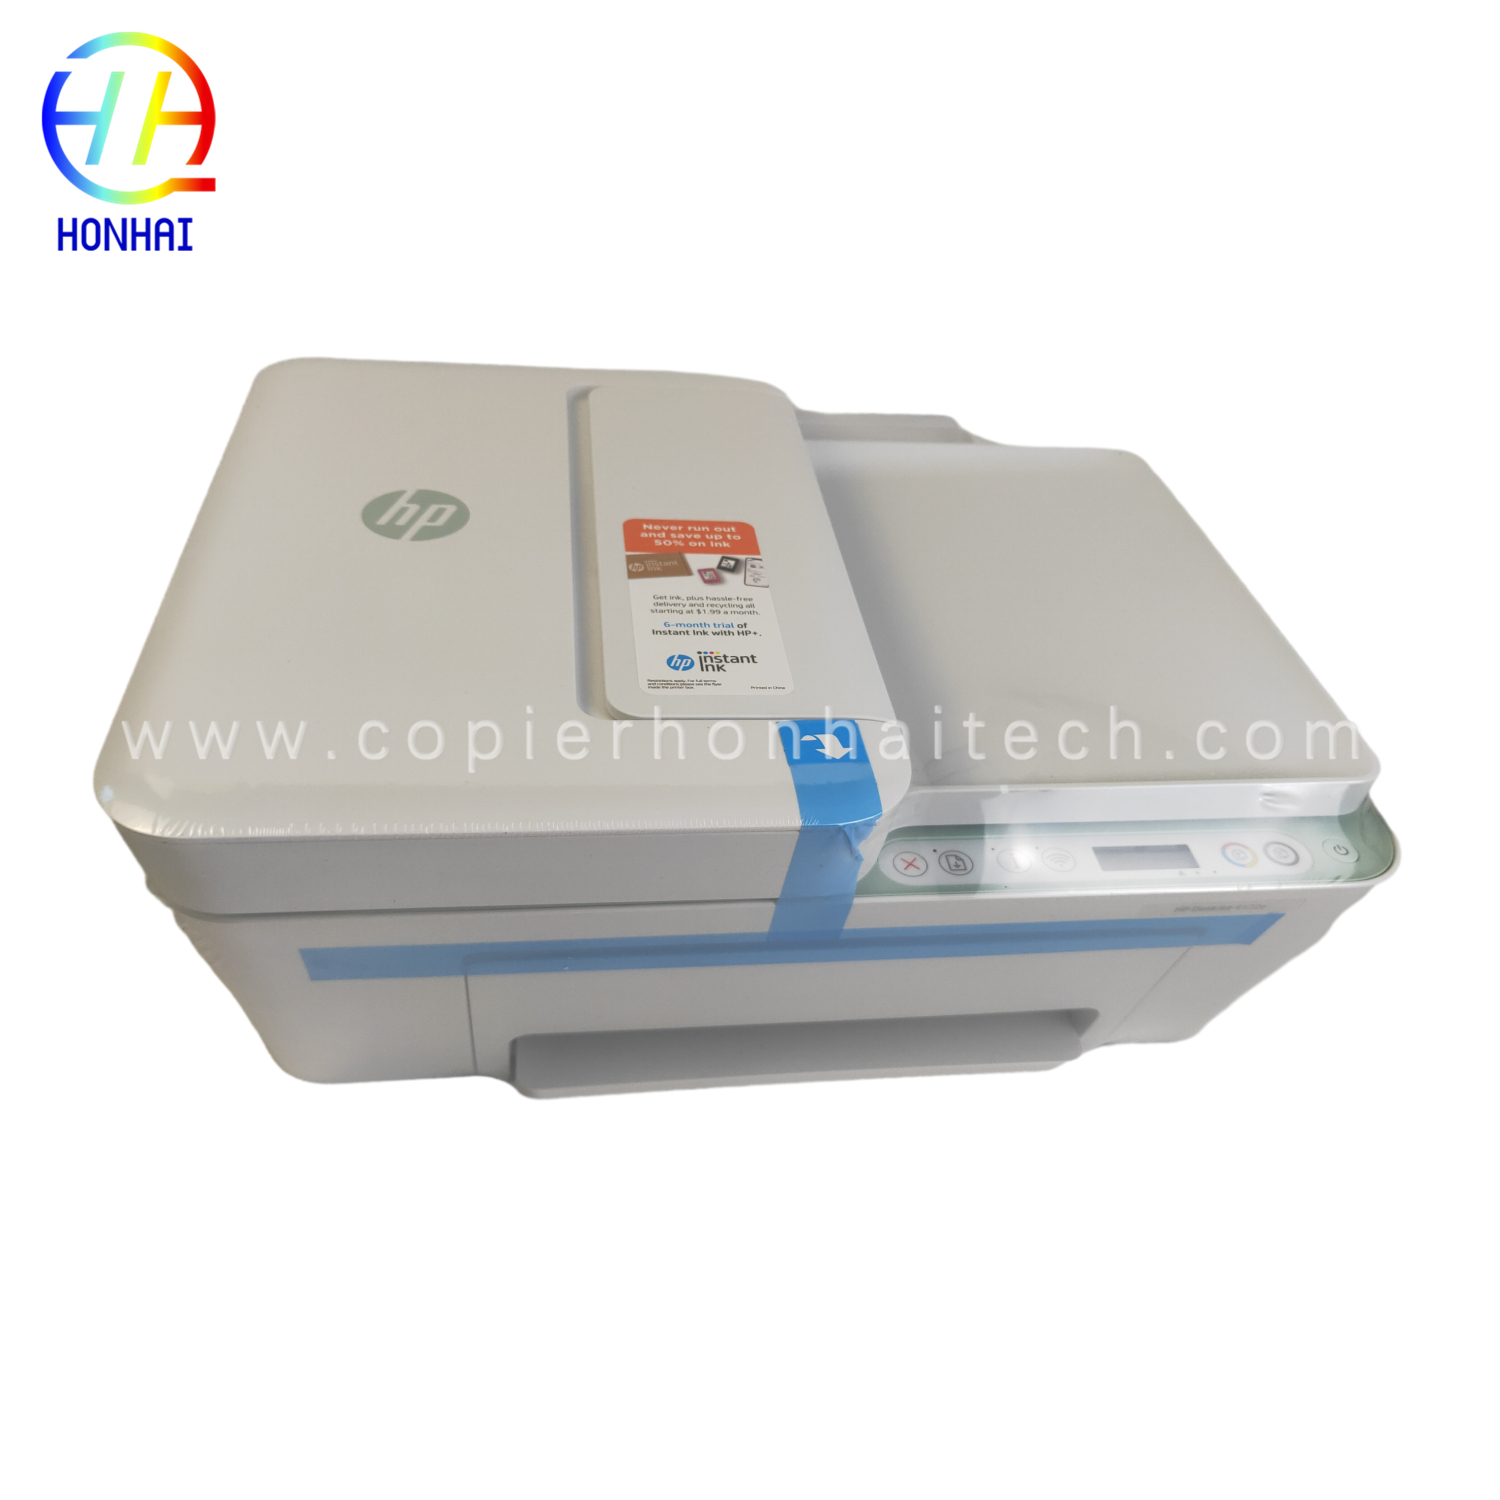 https://www.copierhonhaitech.com/original-new-wireless-printer-for-hp-deskjet-4122e-all-in-one-printer-scan-and-copy-home-office-students-and-home- प्रिन्टर-26q96a-उत्पादन/